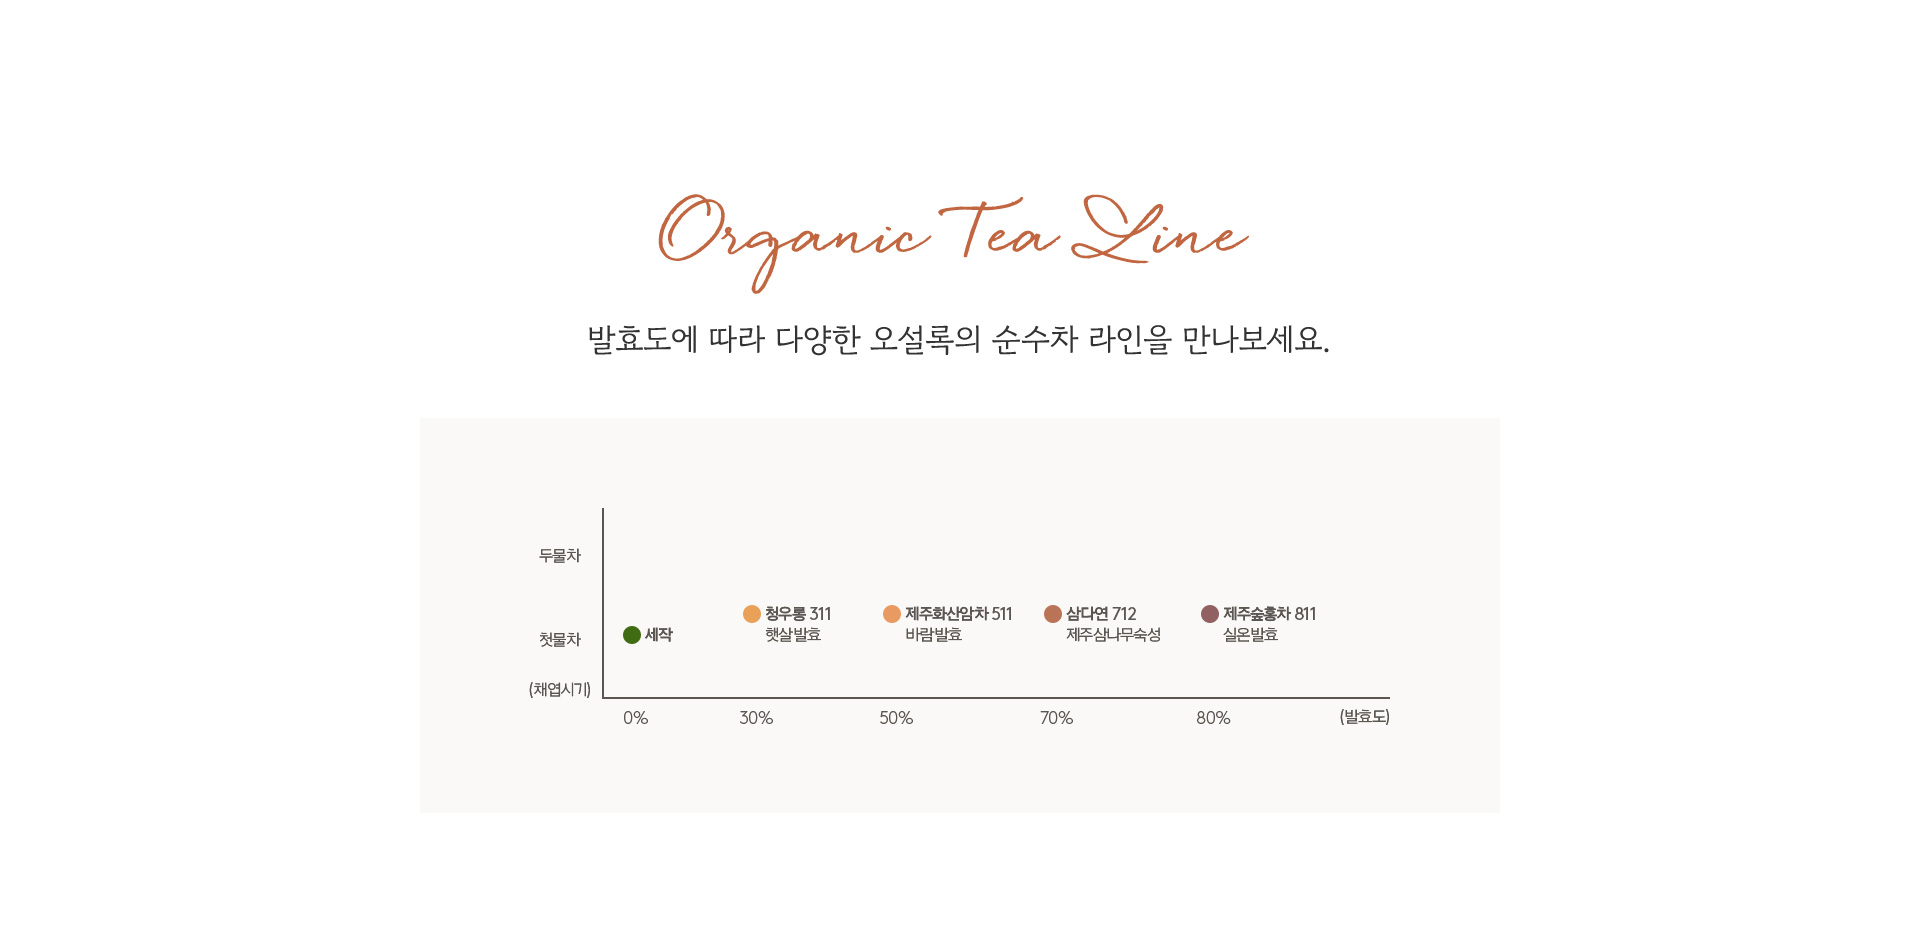 Organic Tea Line